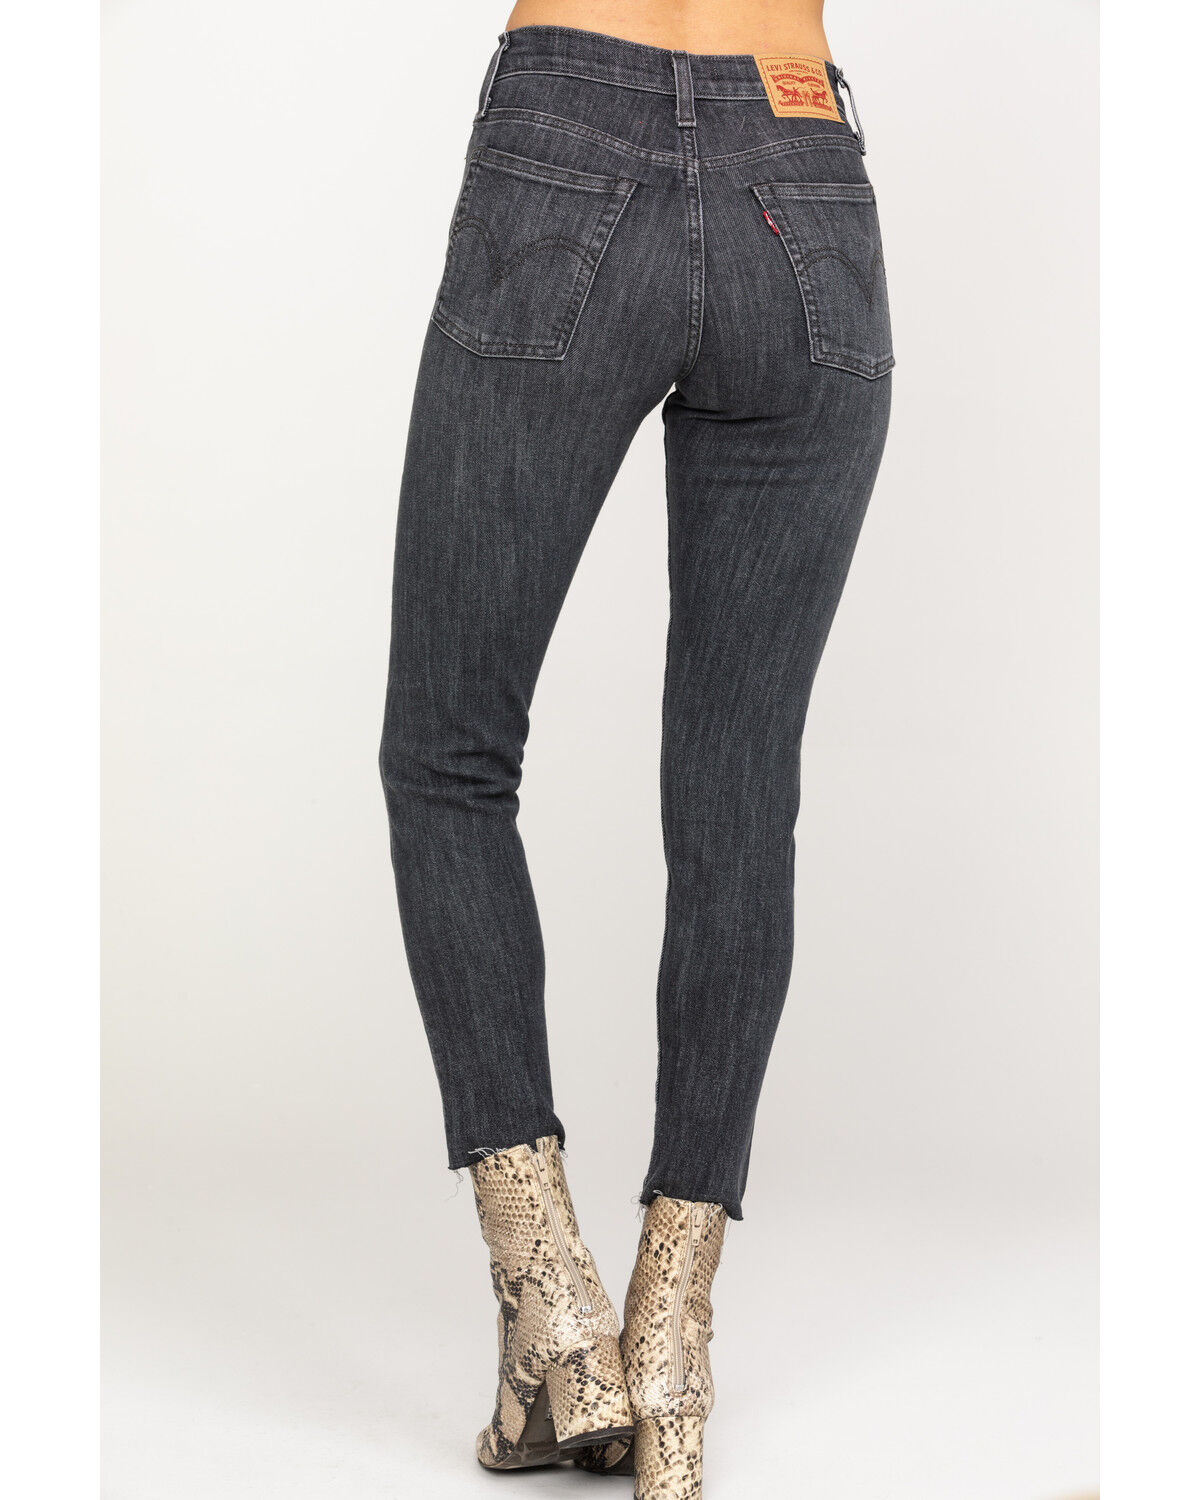 Levi's Women's Wedgie Skinny Jeans 